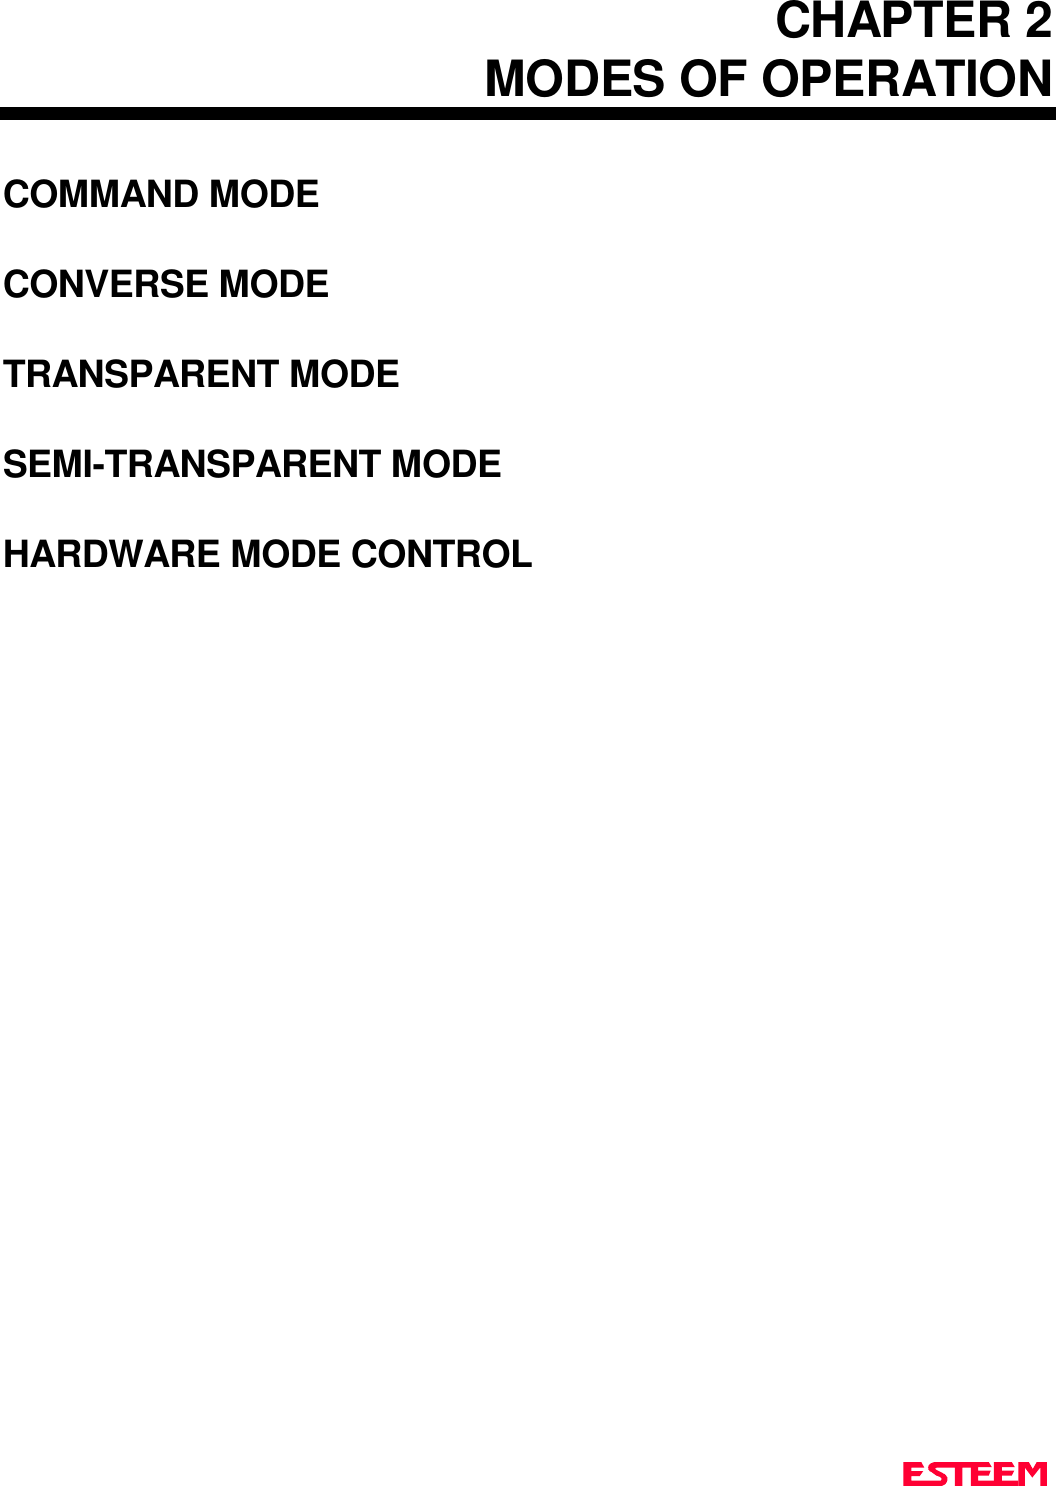 CHAPTER 2MODES OF OPERATIONCOMMAND MODECONVERSE MODETRANSPARENT MODESEMI-TRANSPARENT MODEHARDWARE MODE CONTROL